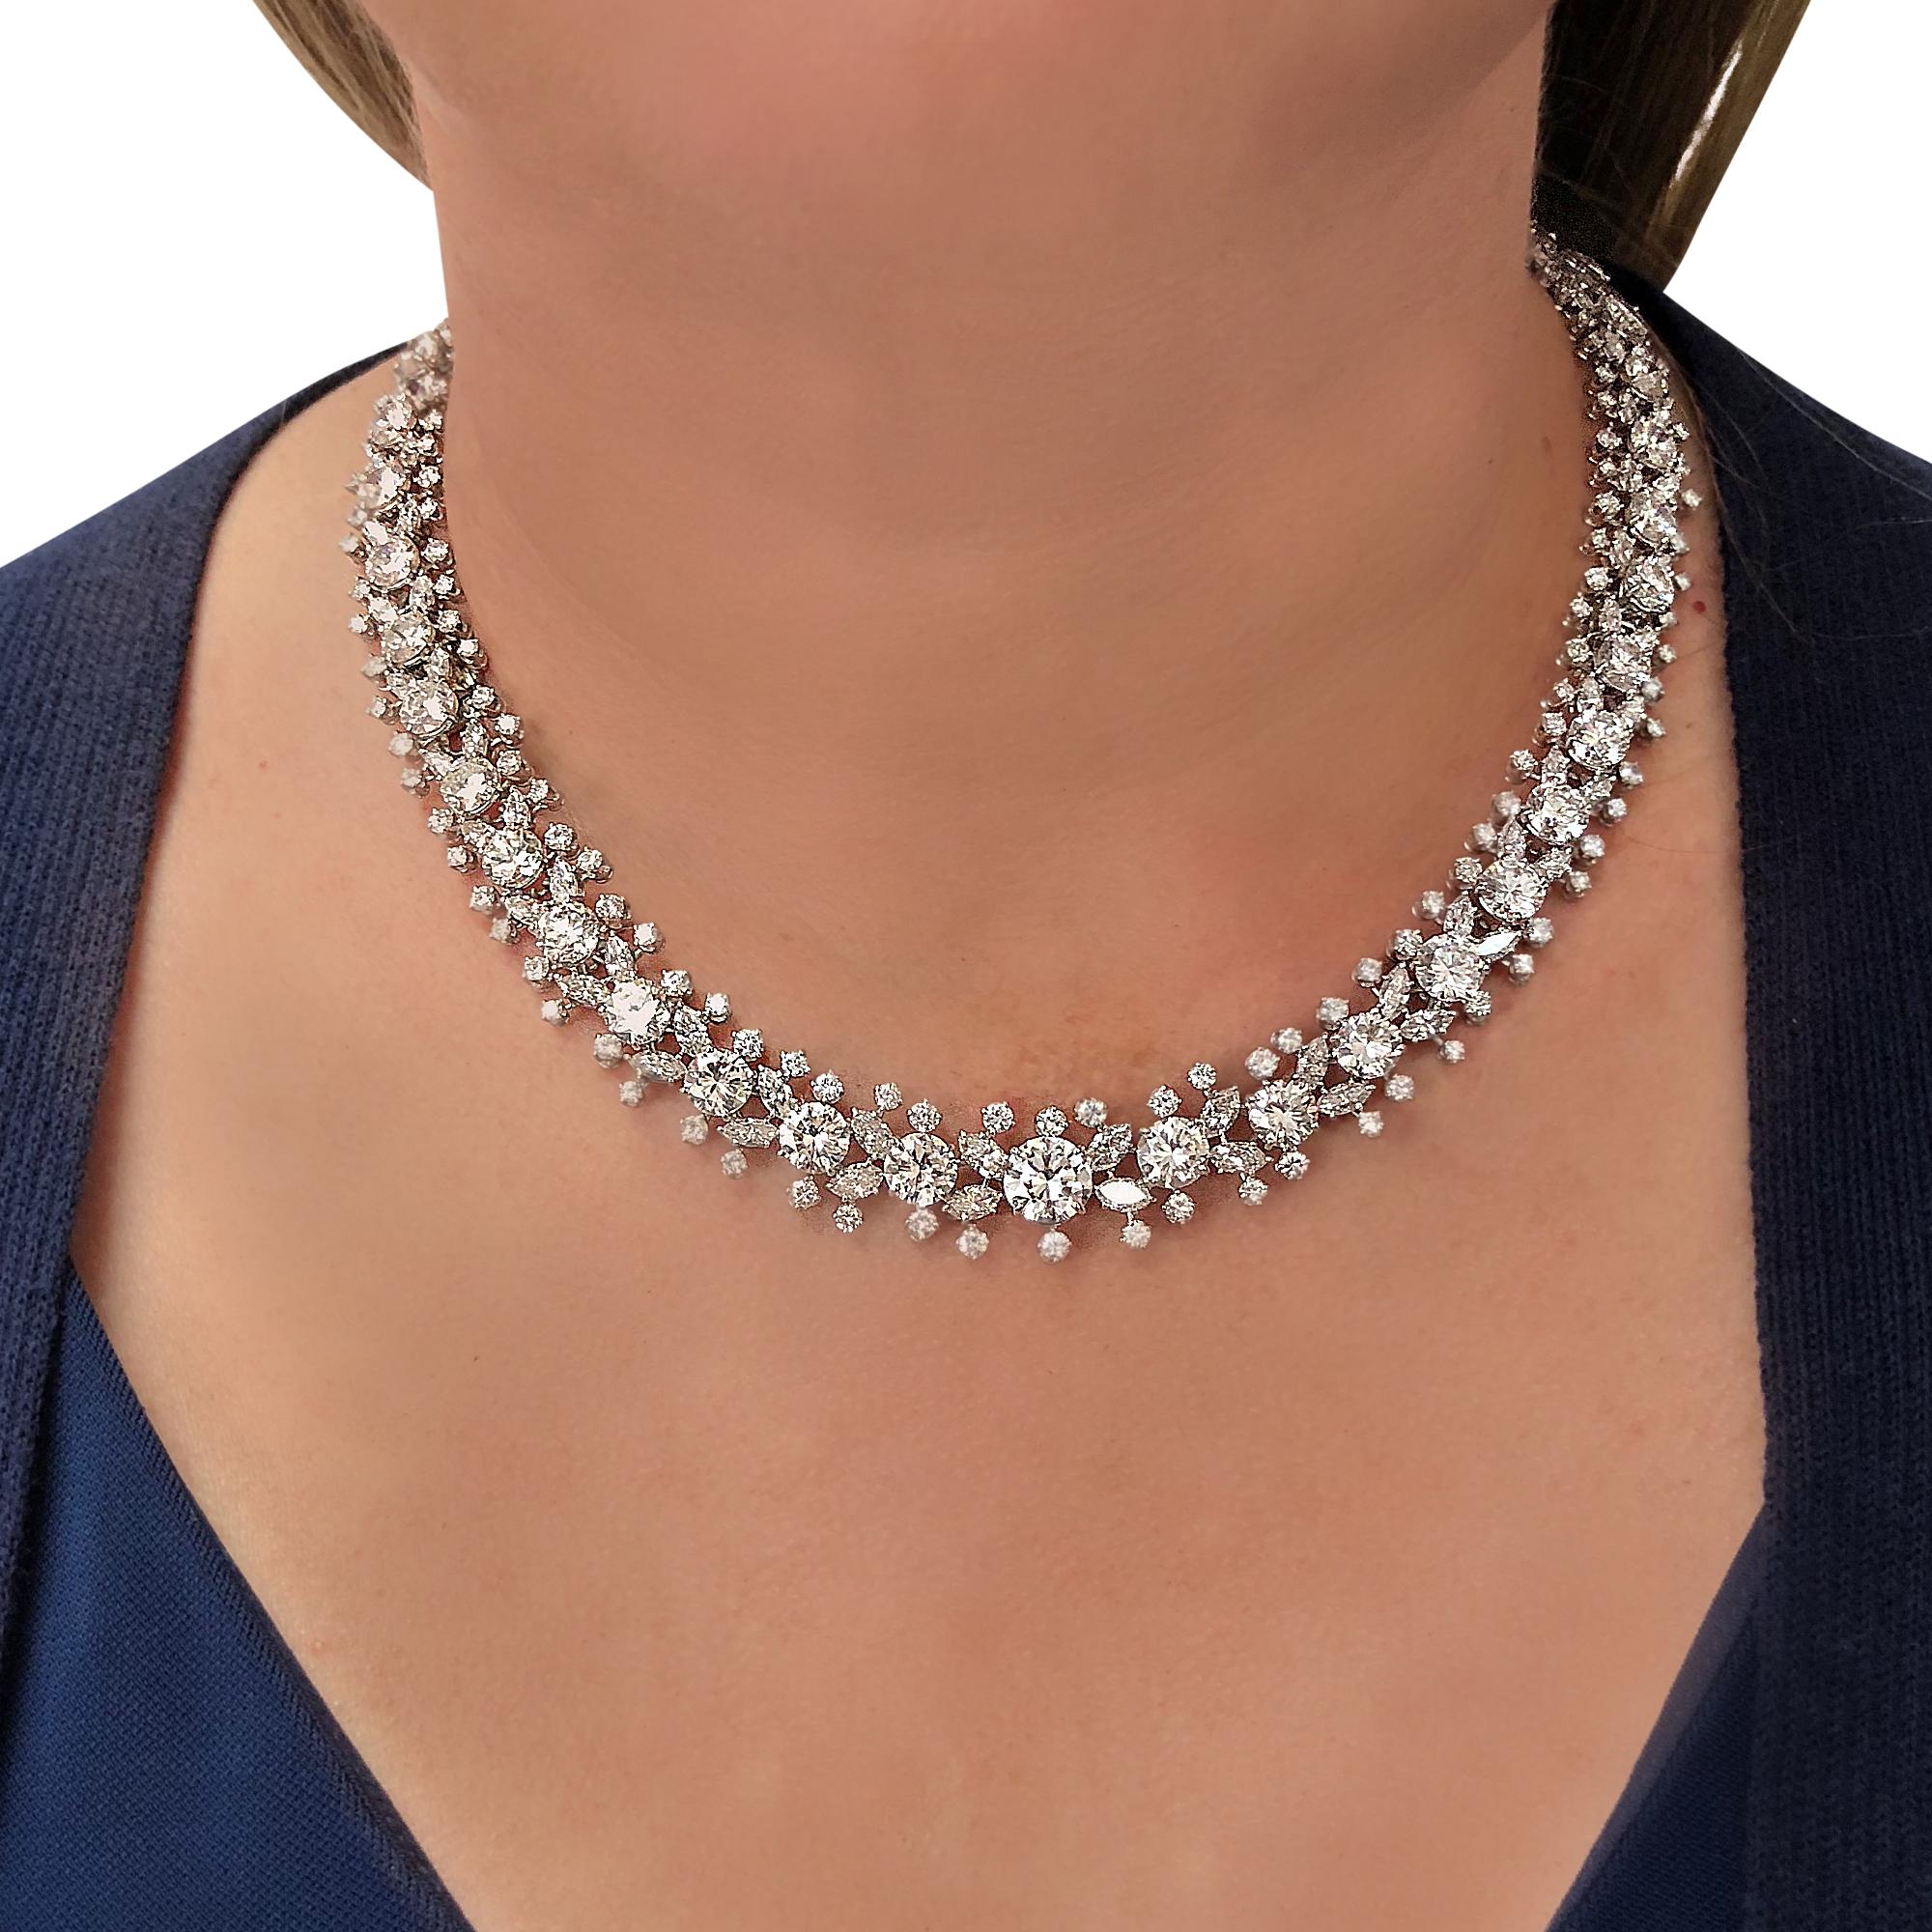 Modern Important Midcentury Harry Winston 52 Carat Diamond Necklace Bracelet Set